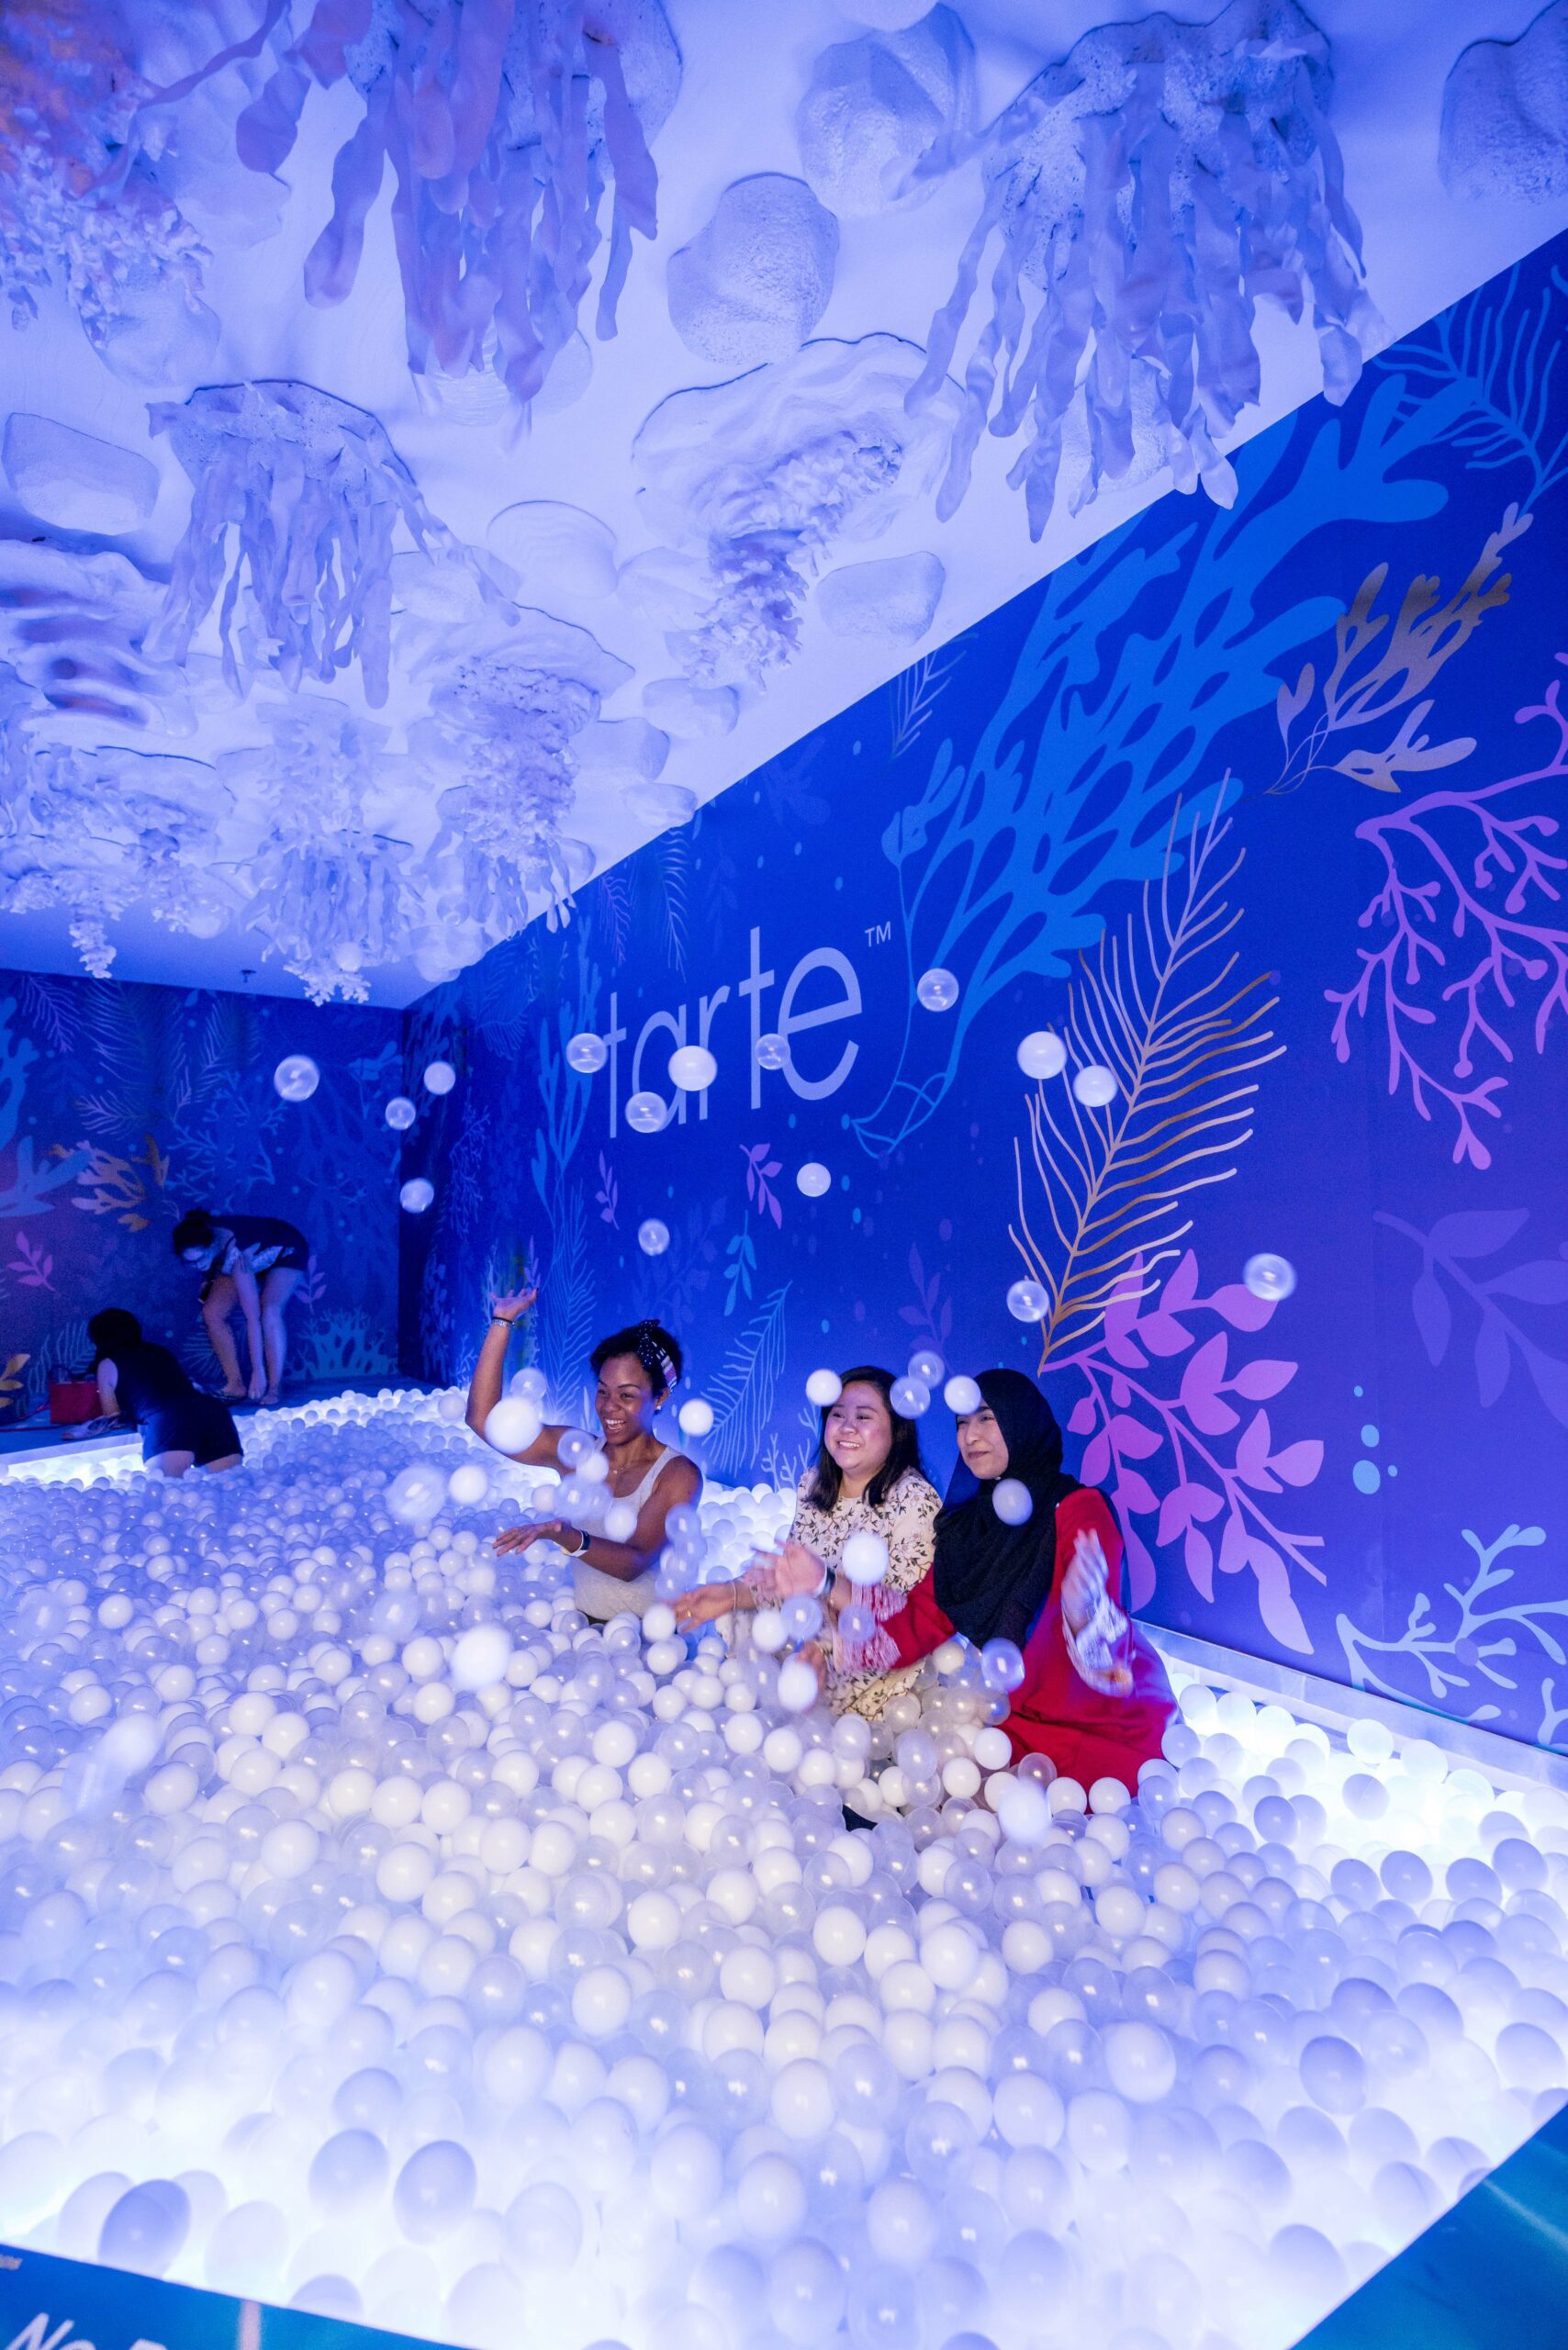 Sephora Playhouse - Tarte's Underwater Room